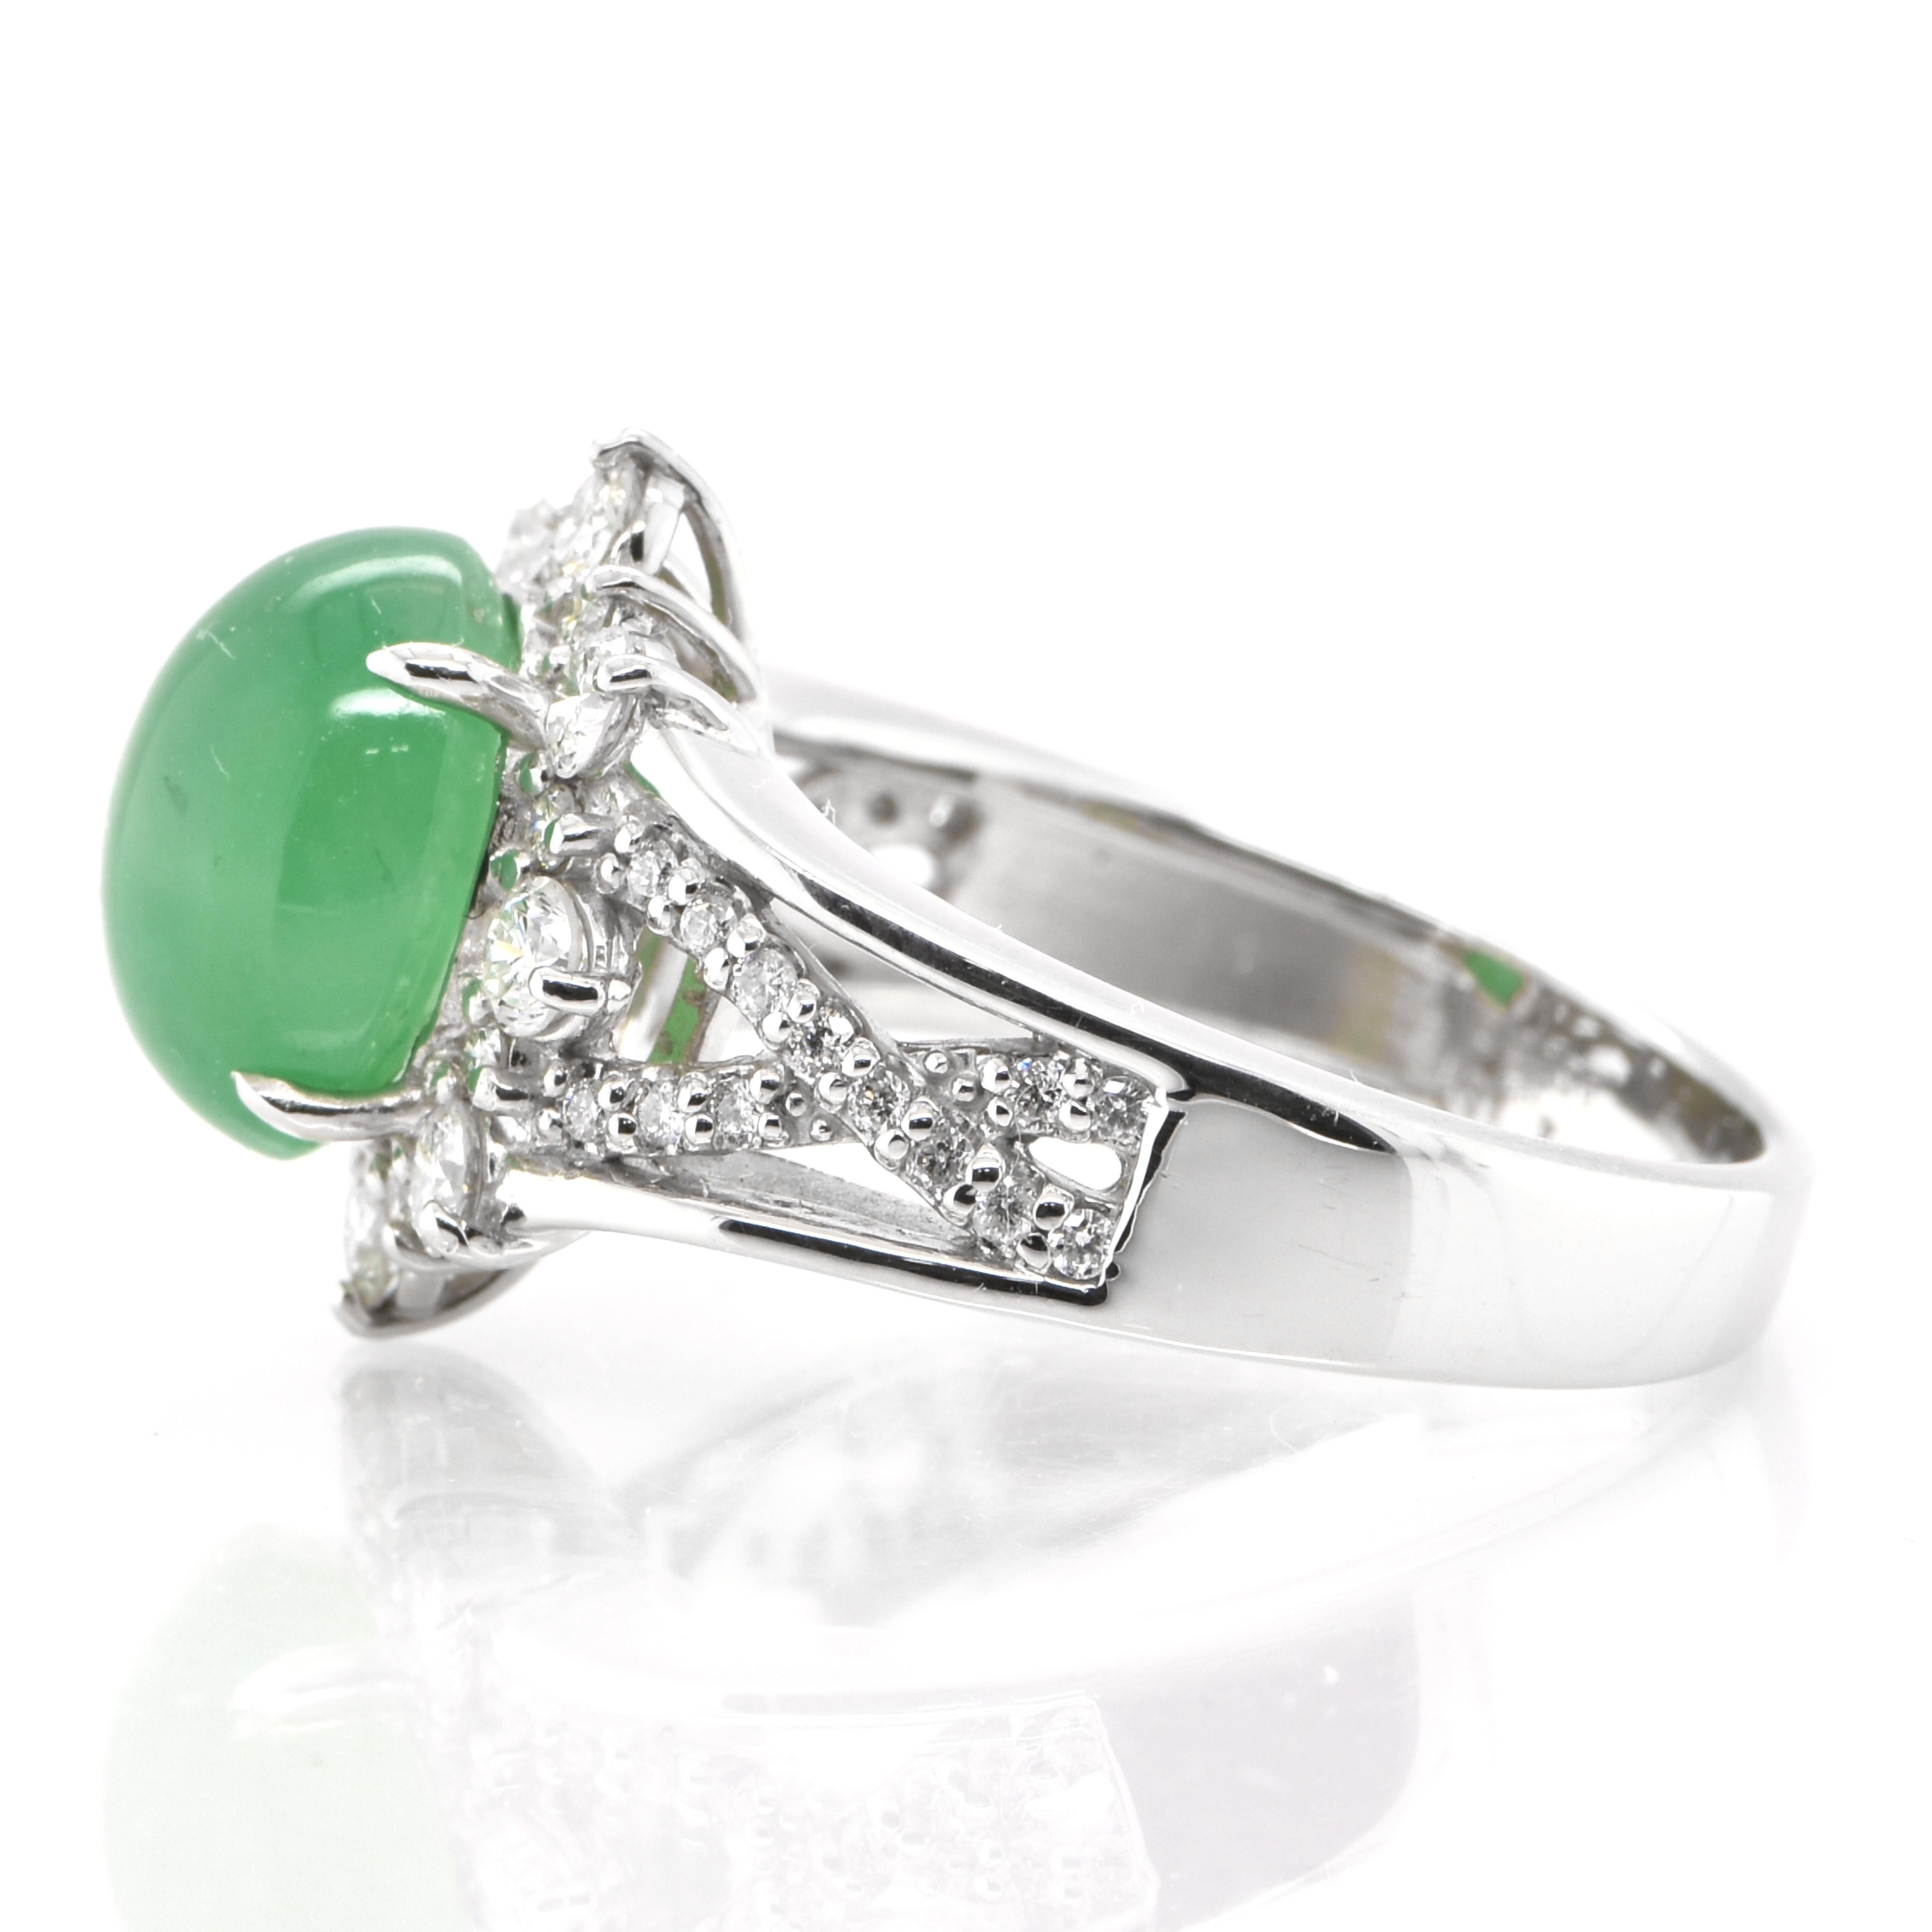 Modern 4.10 Carat Natural Apple Green Jadeite and Diamond Cocktail Ring Set in Platinum